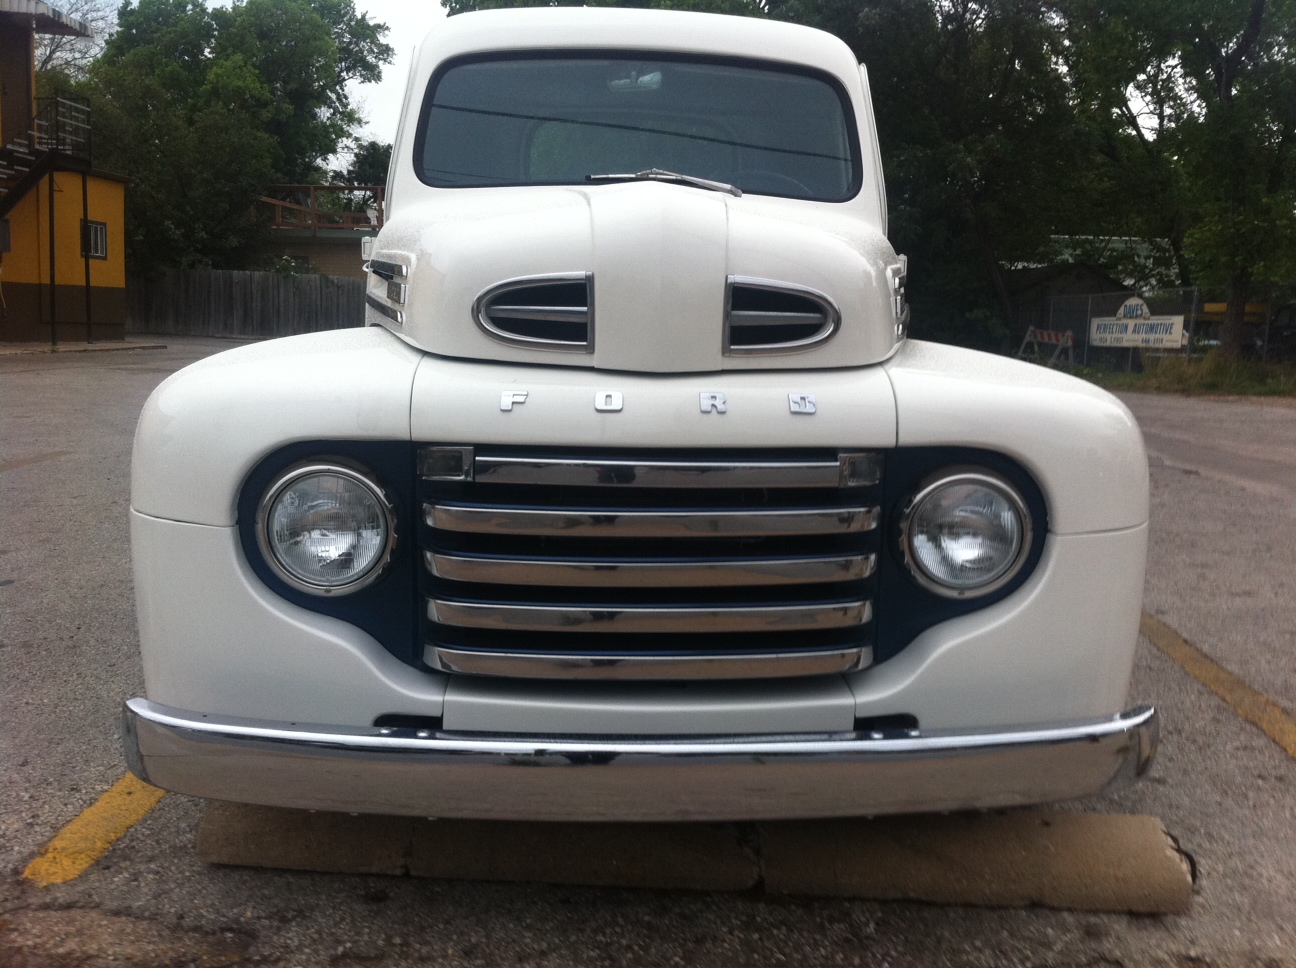 Austin texas ford trucks #5